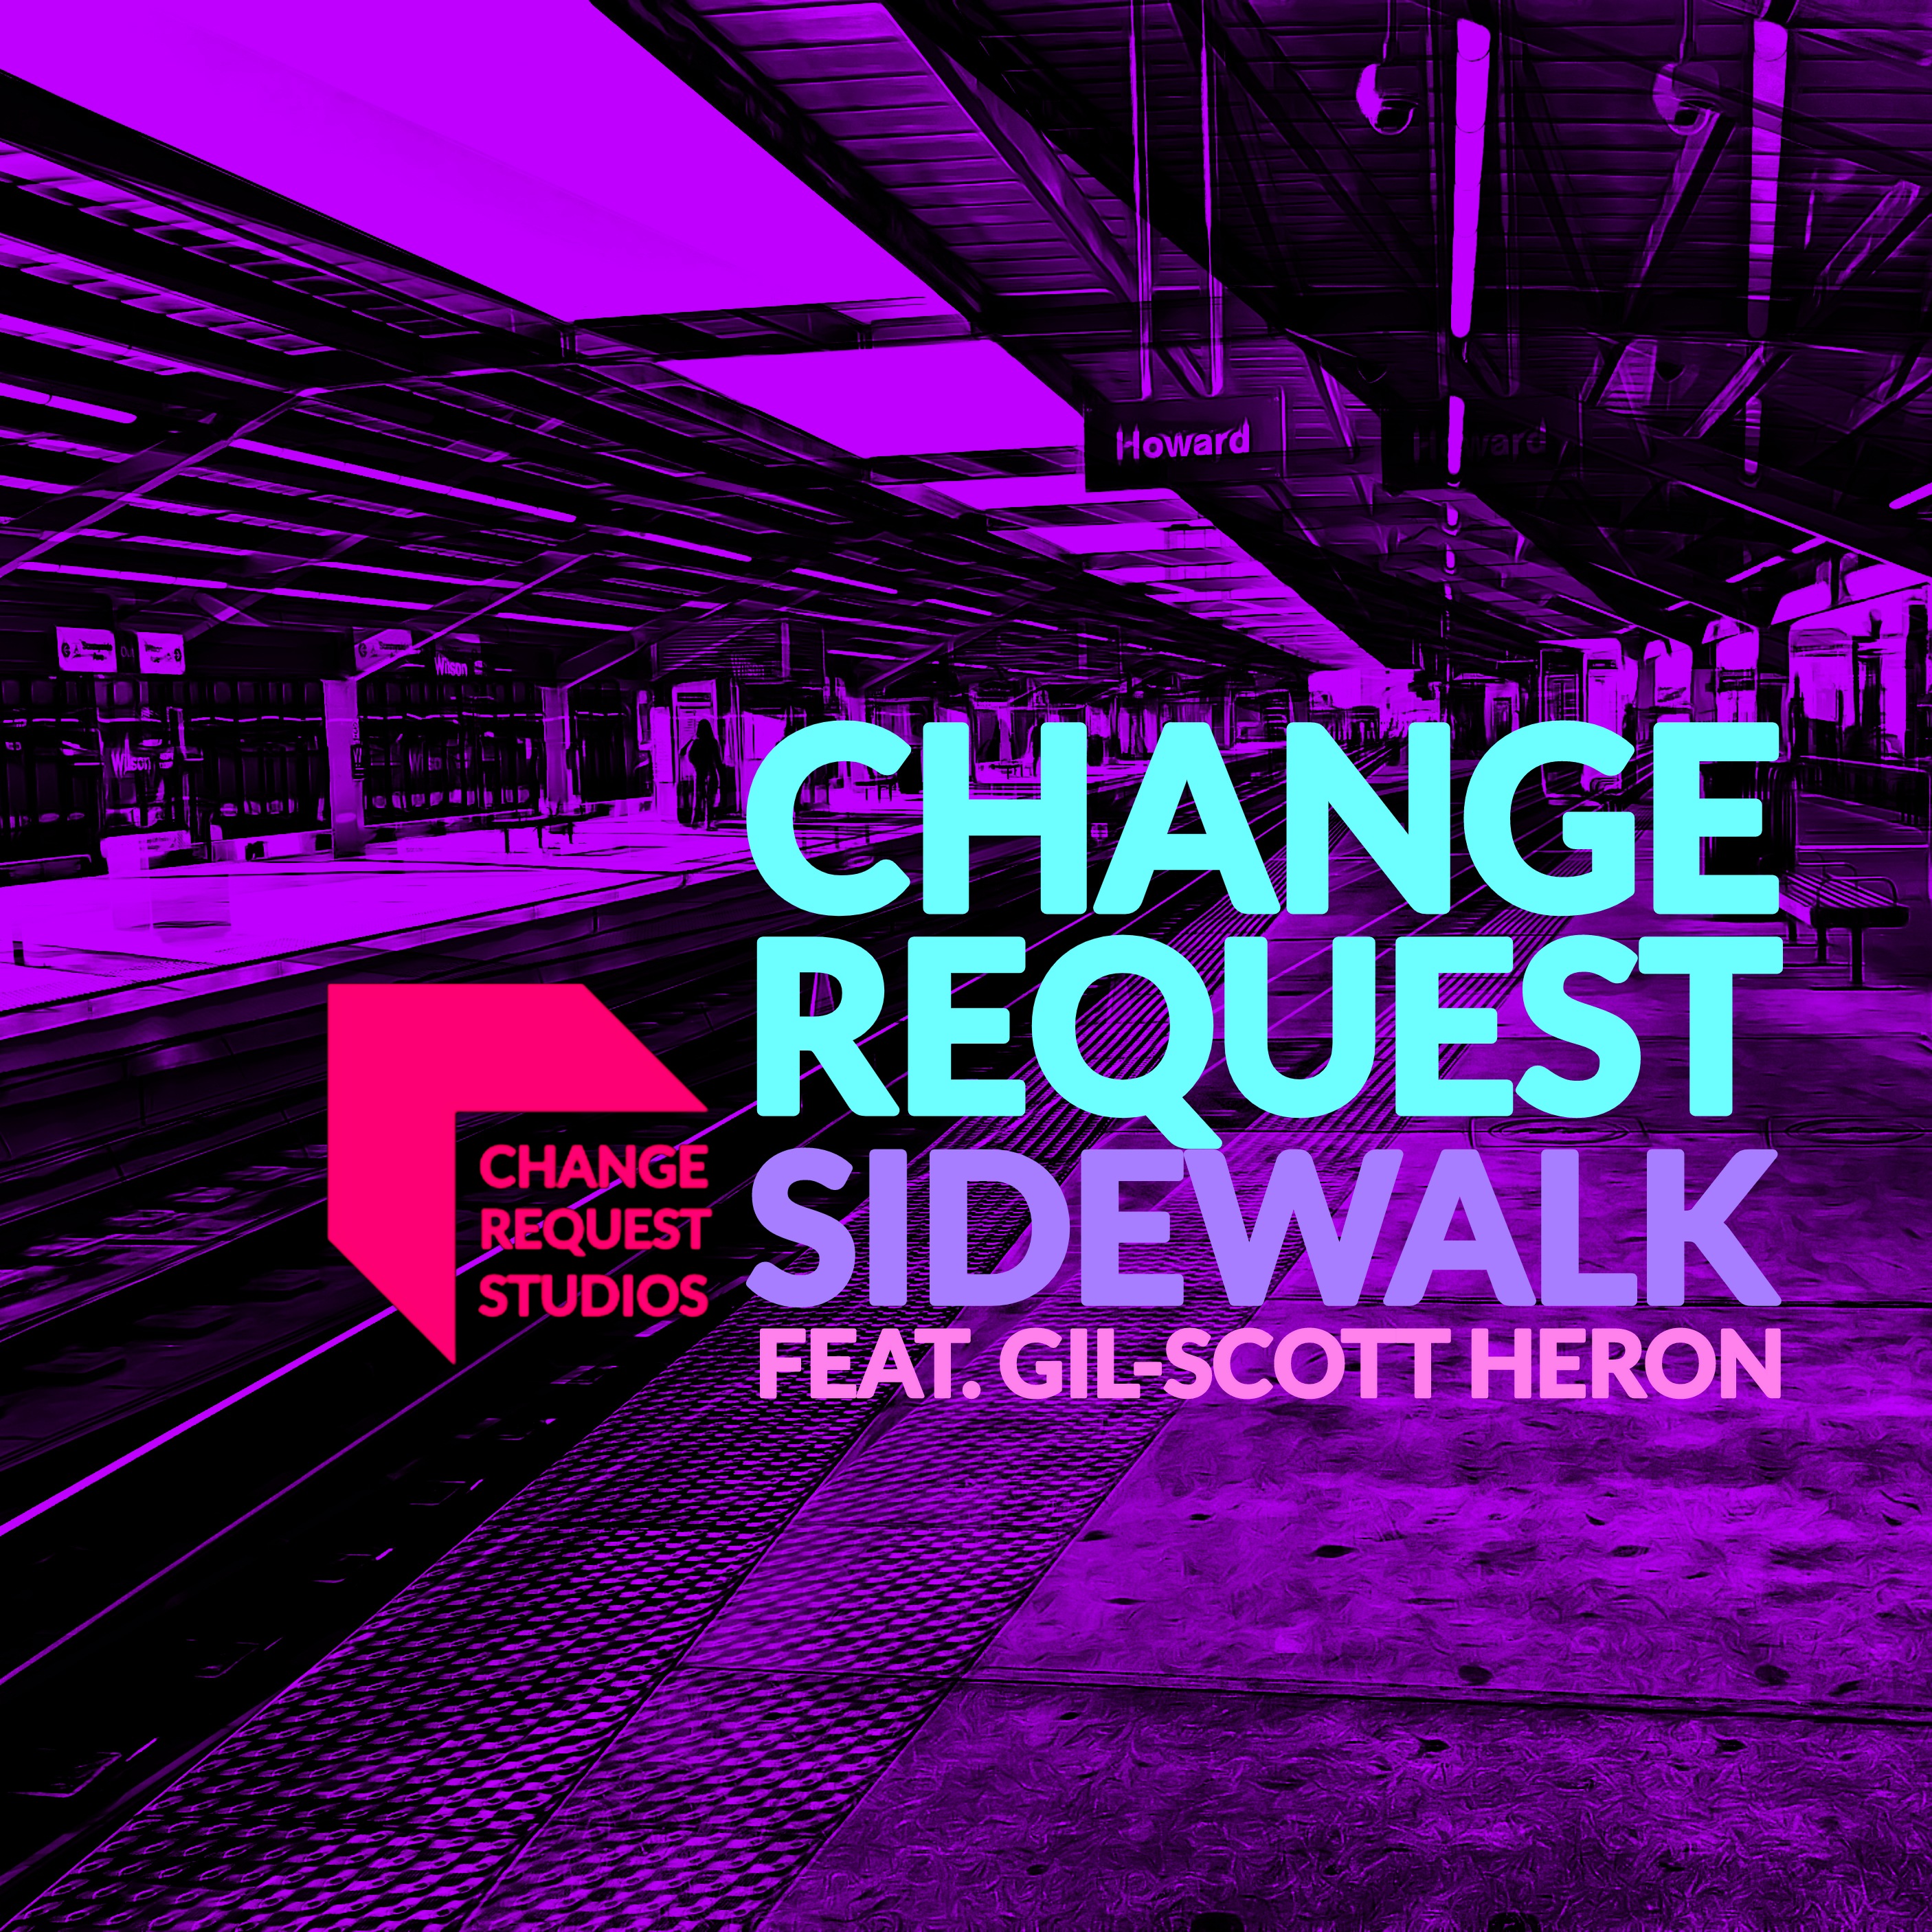 Sidewalk Feat. Gil-Scott Heron